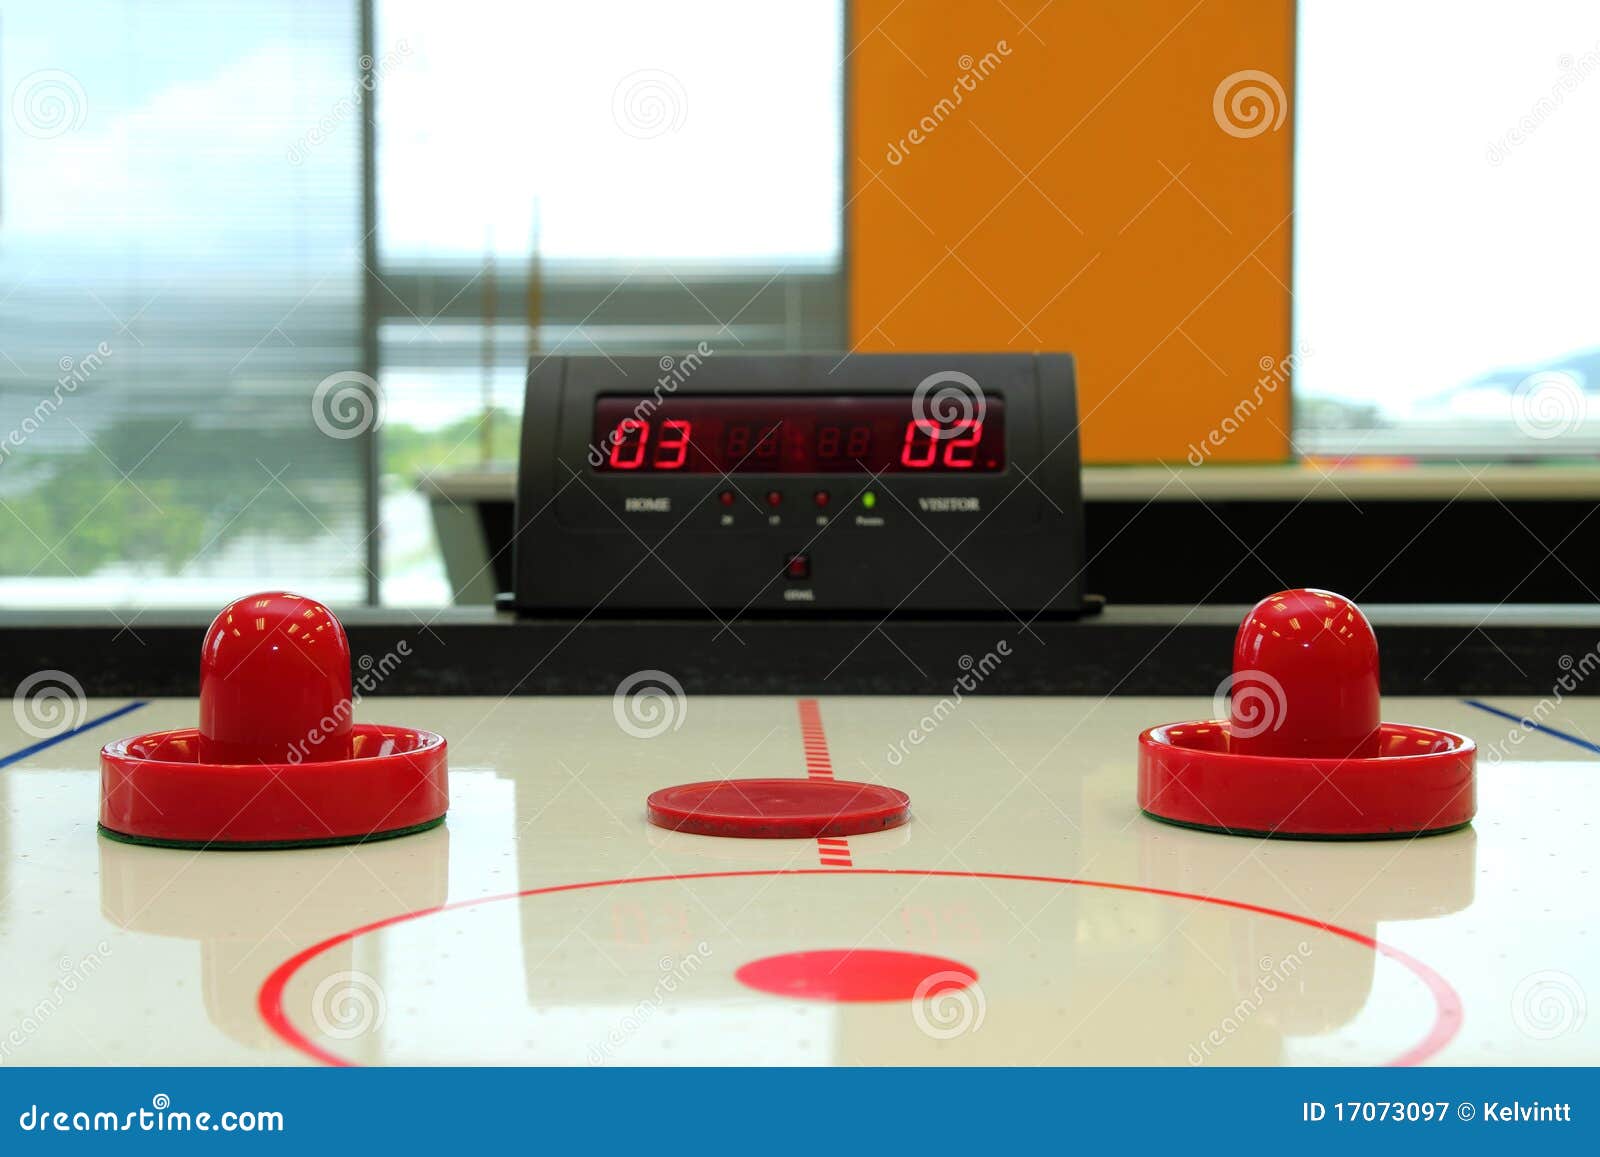 Air Hockey Game stock image